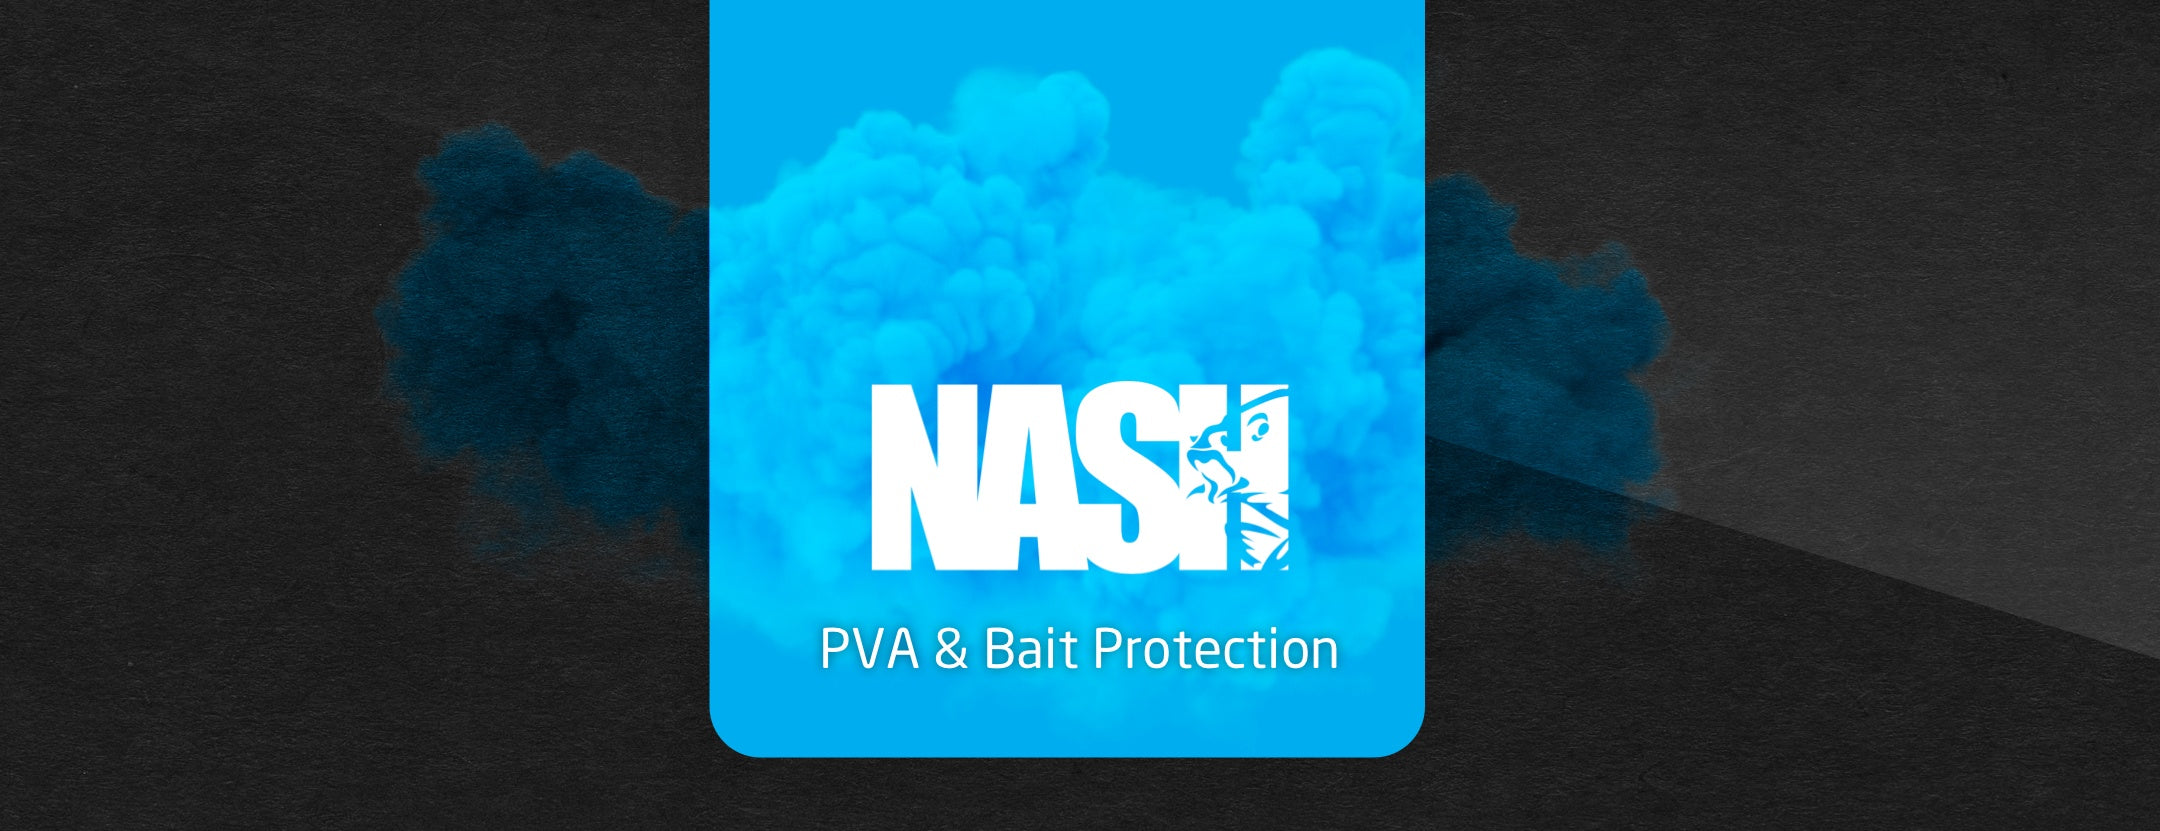 Nash-PVA-Bait-Protection